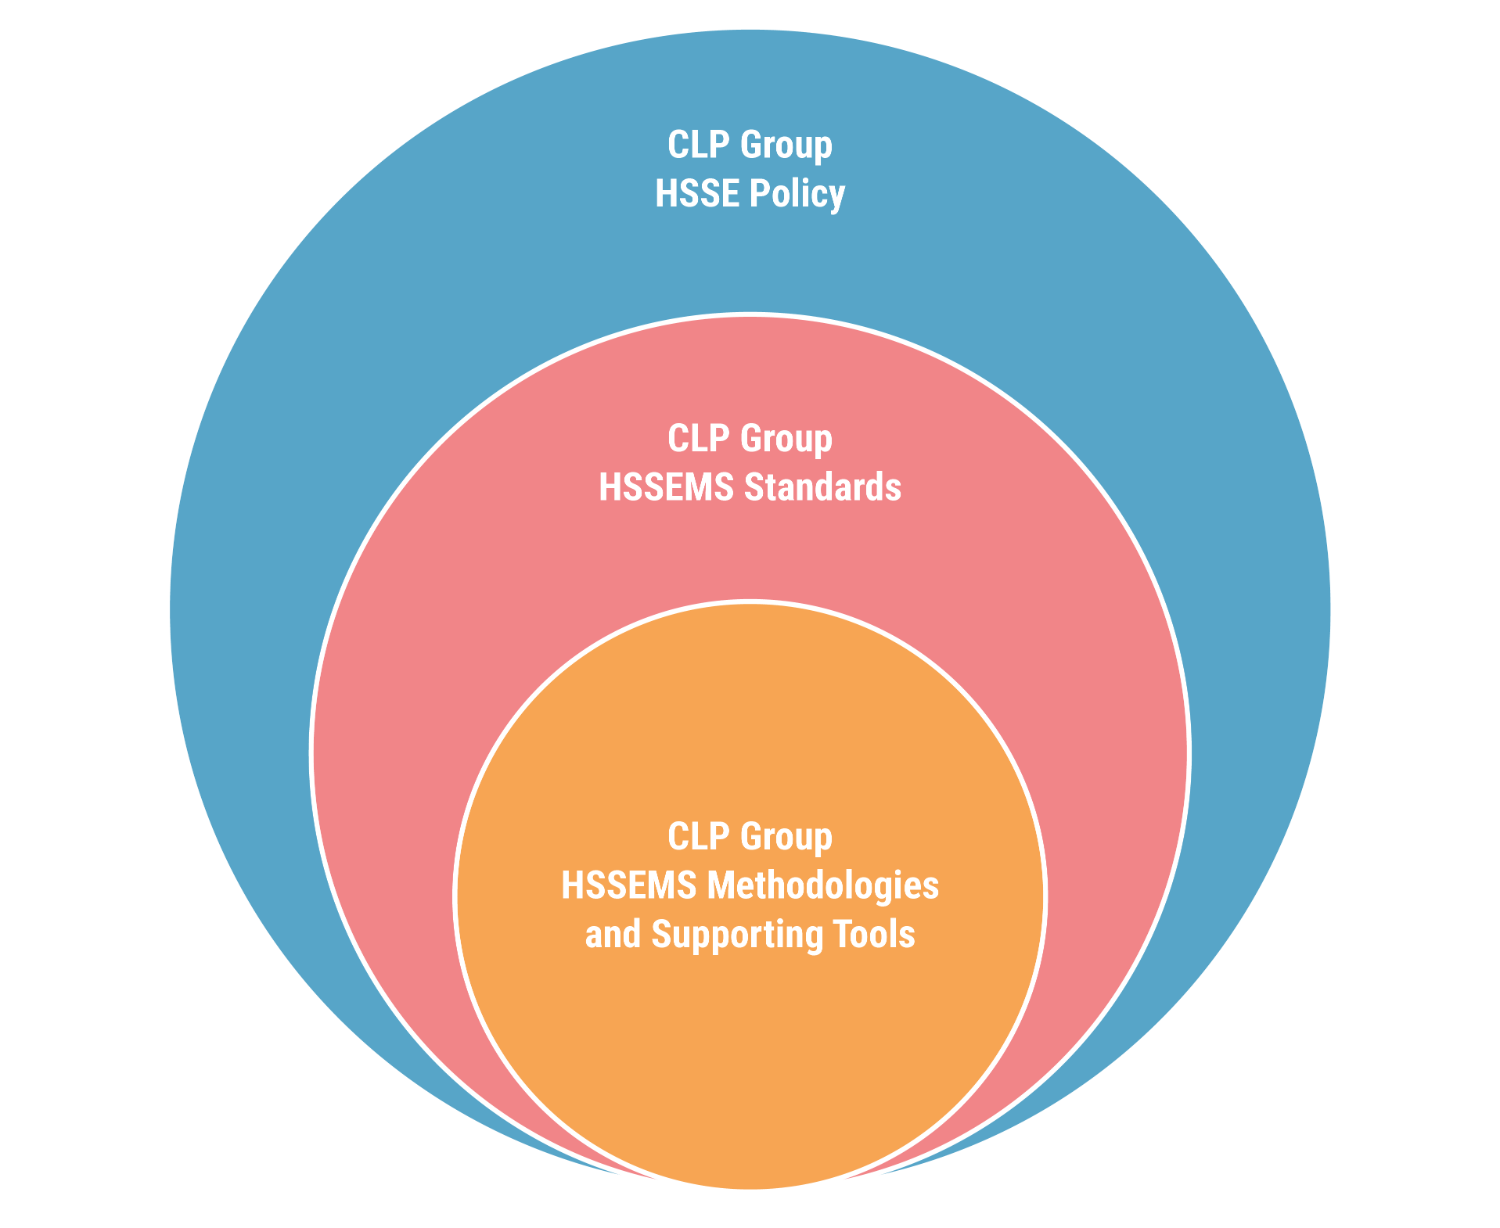 6.6 CLPs HSSE framework